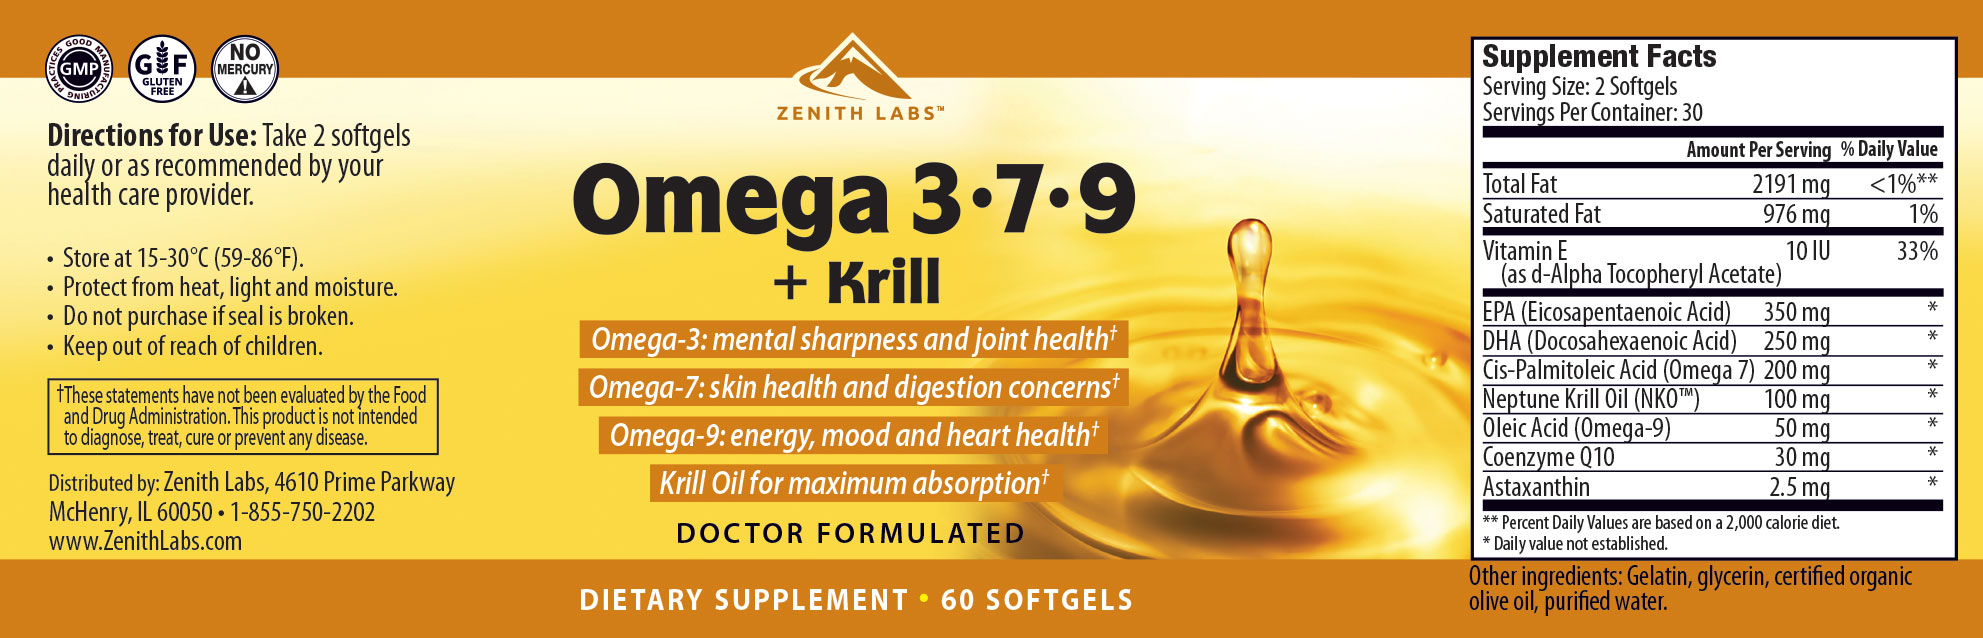 Omega 3-7-9 Krill Ingredients Label